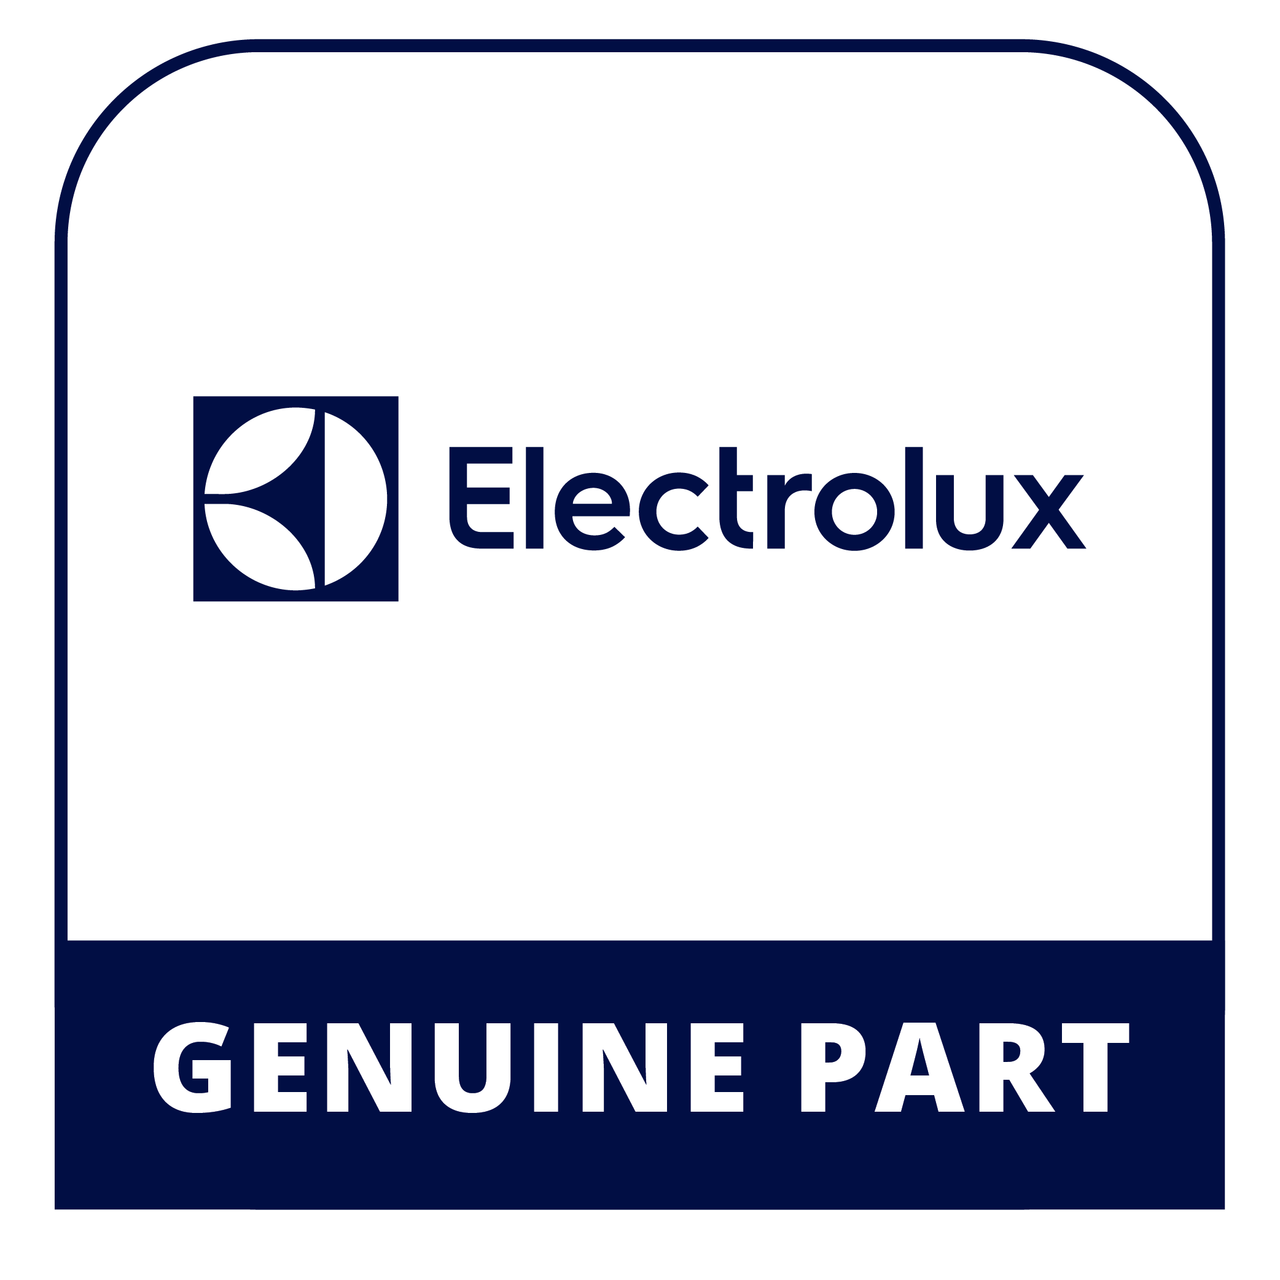 Frigidaire - Electrolux 316283203 Shield - Genuine Electrolux Part